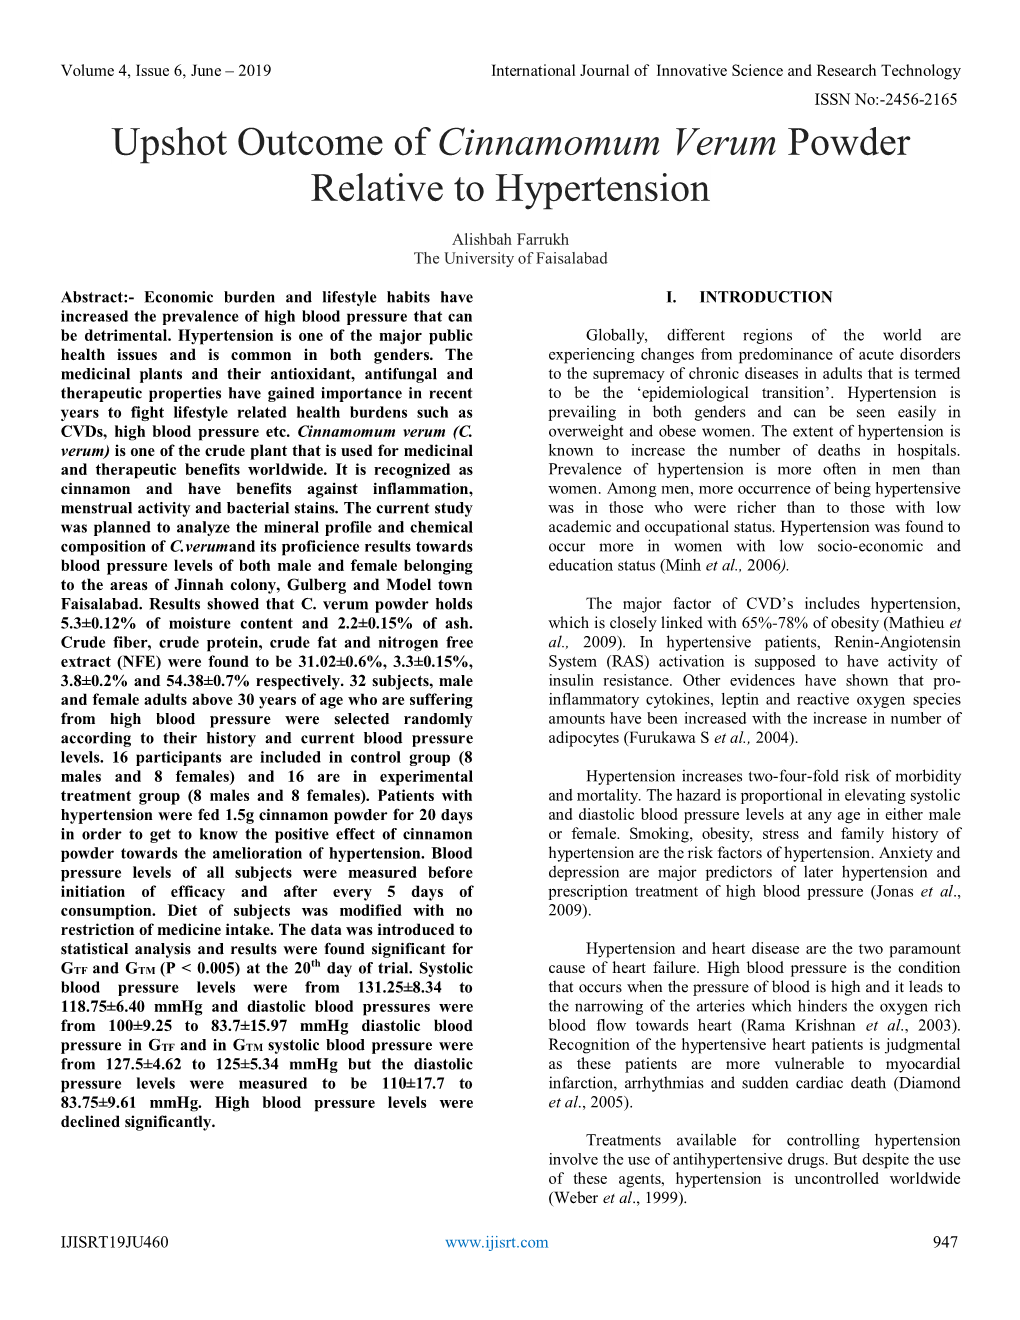 Upshot Outcome of Cinnamomum Verum Powder Relative to Hypertension